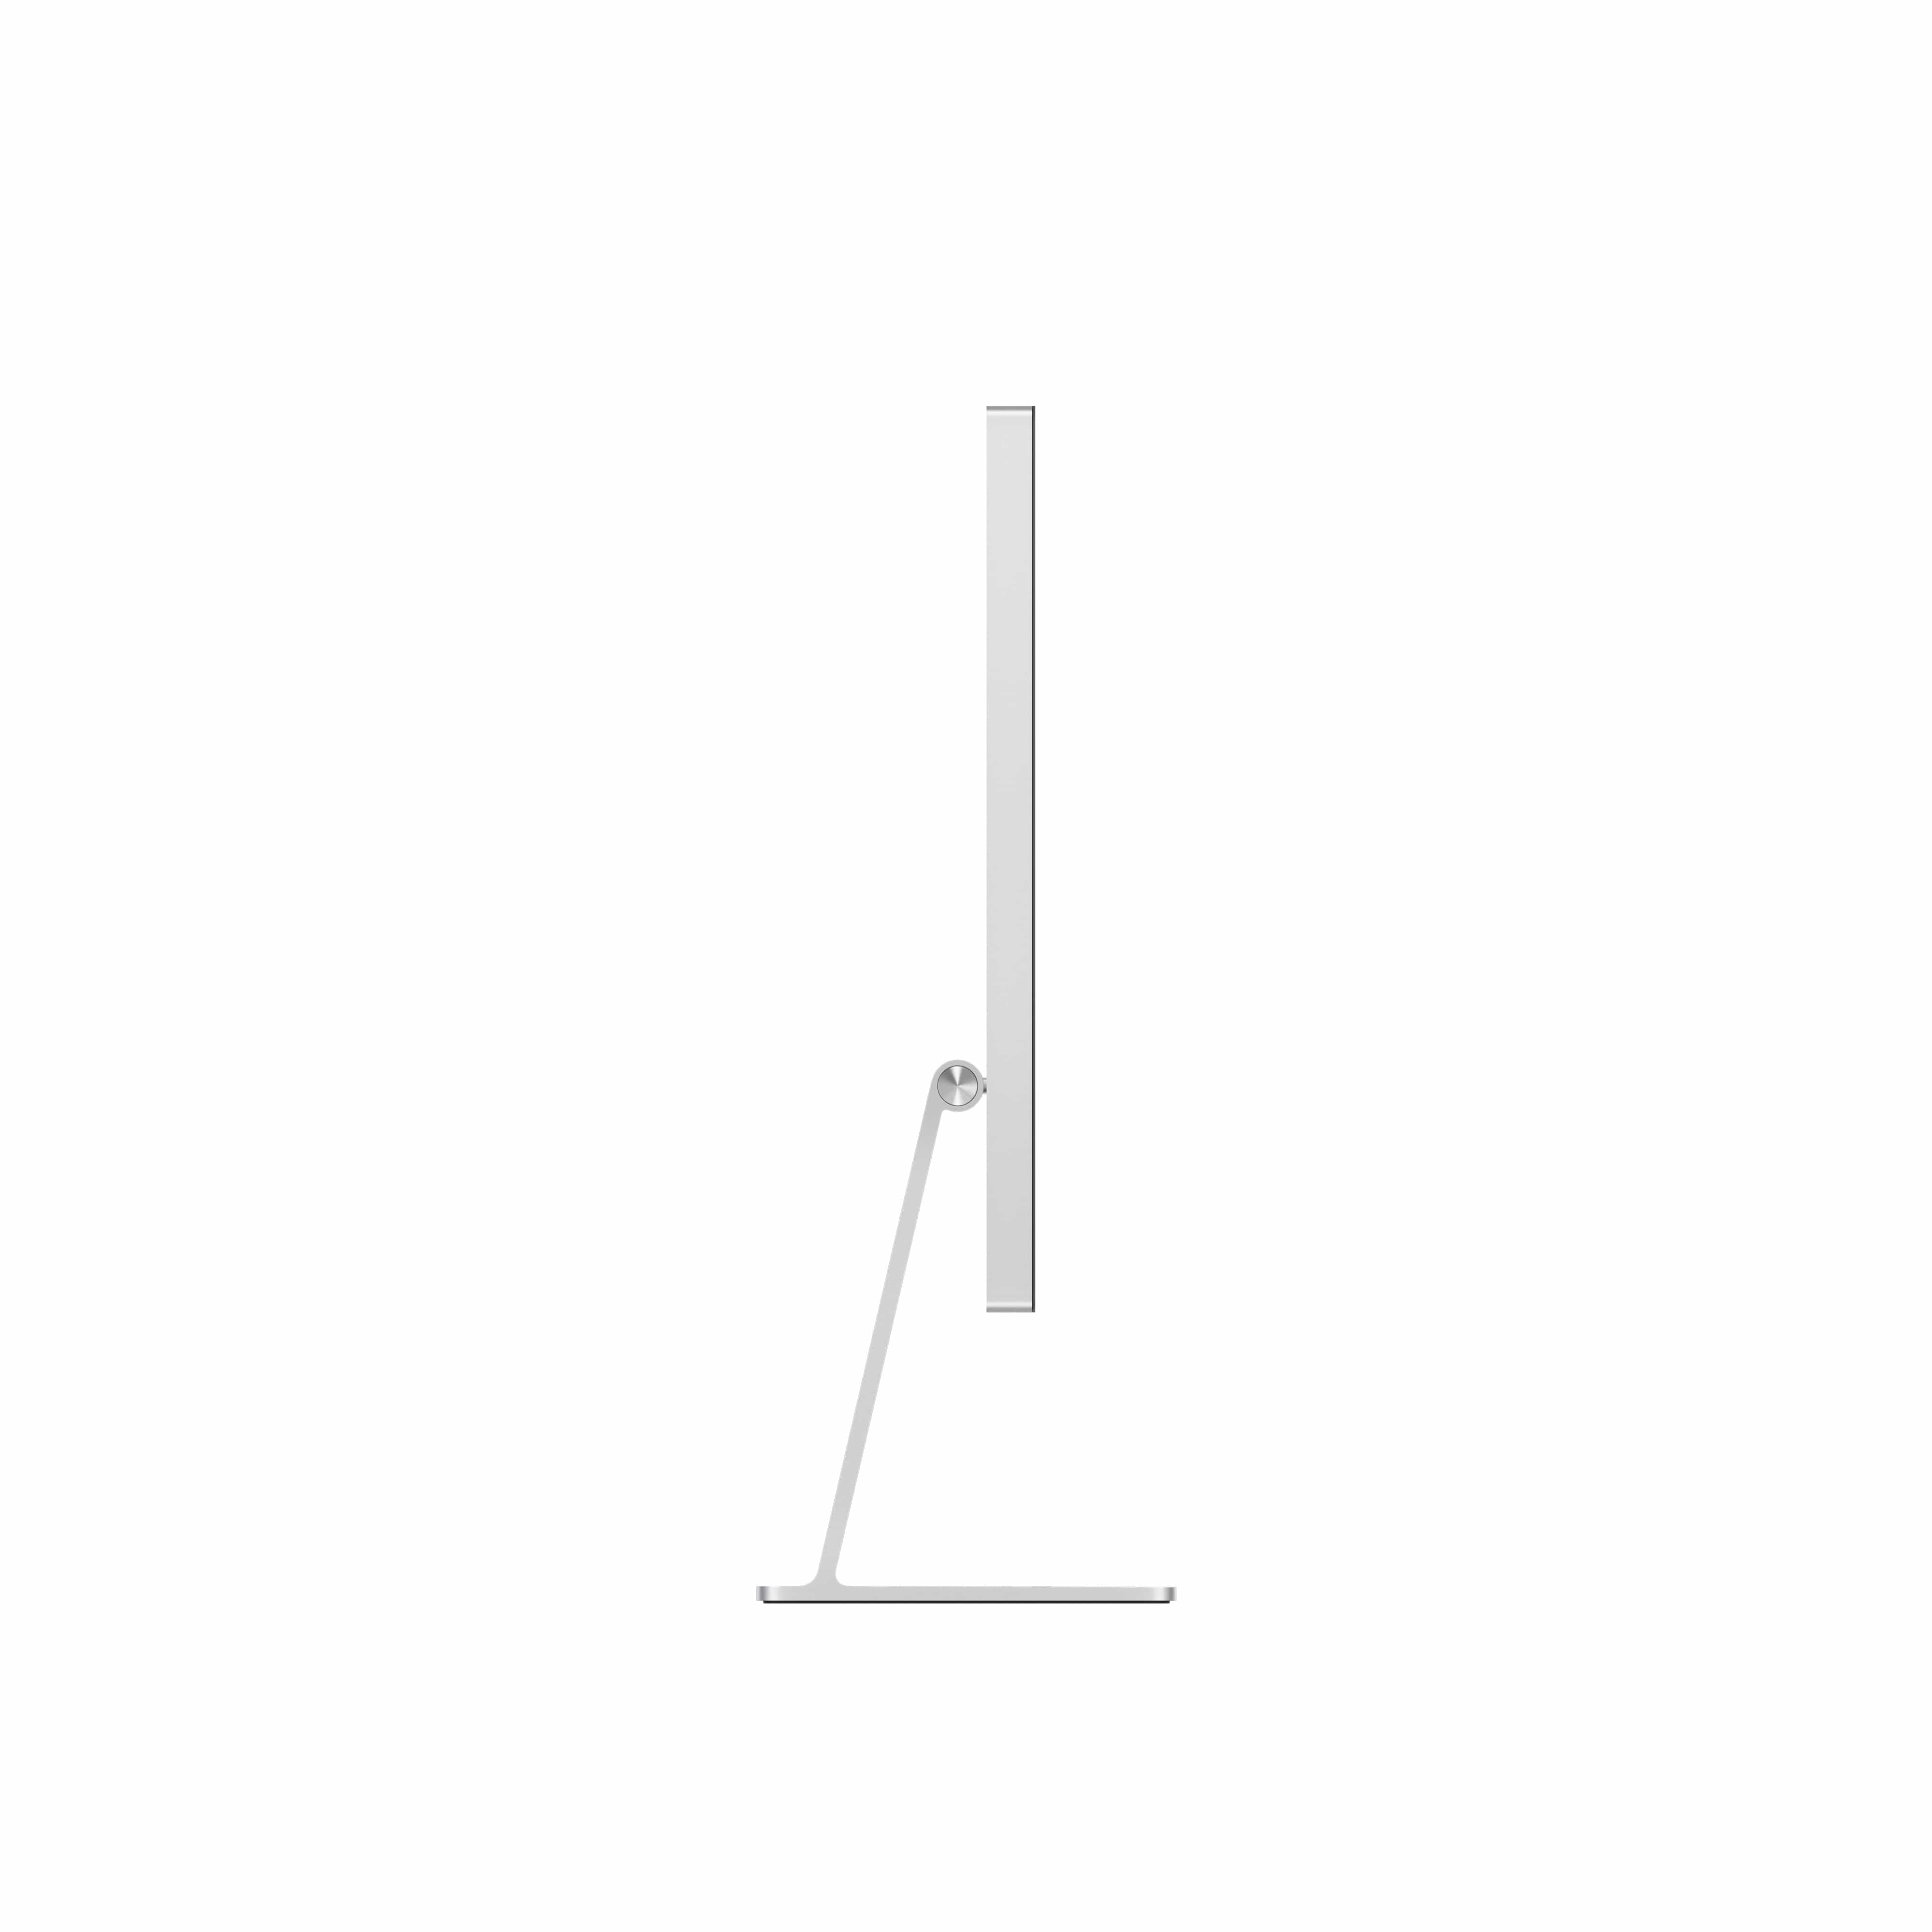 Apple Studio Display - Standard Glass - Tilt-Adjustable Stand